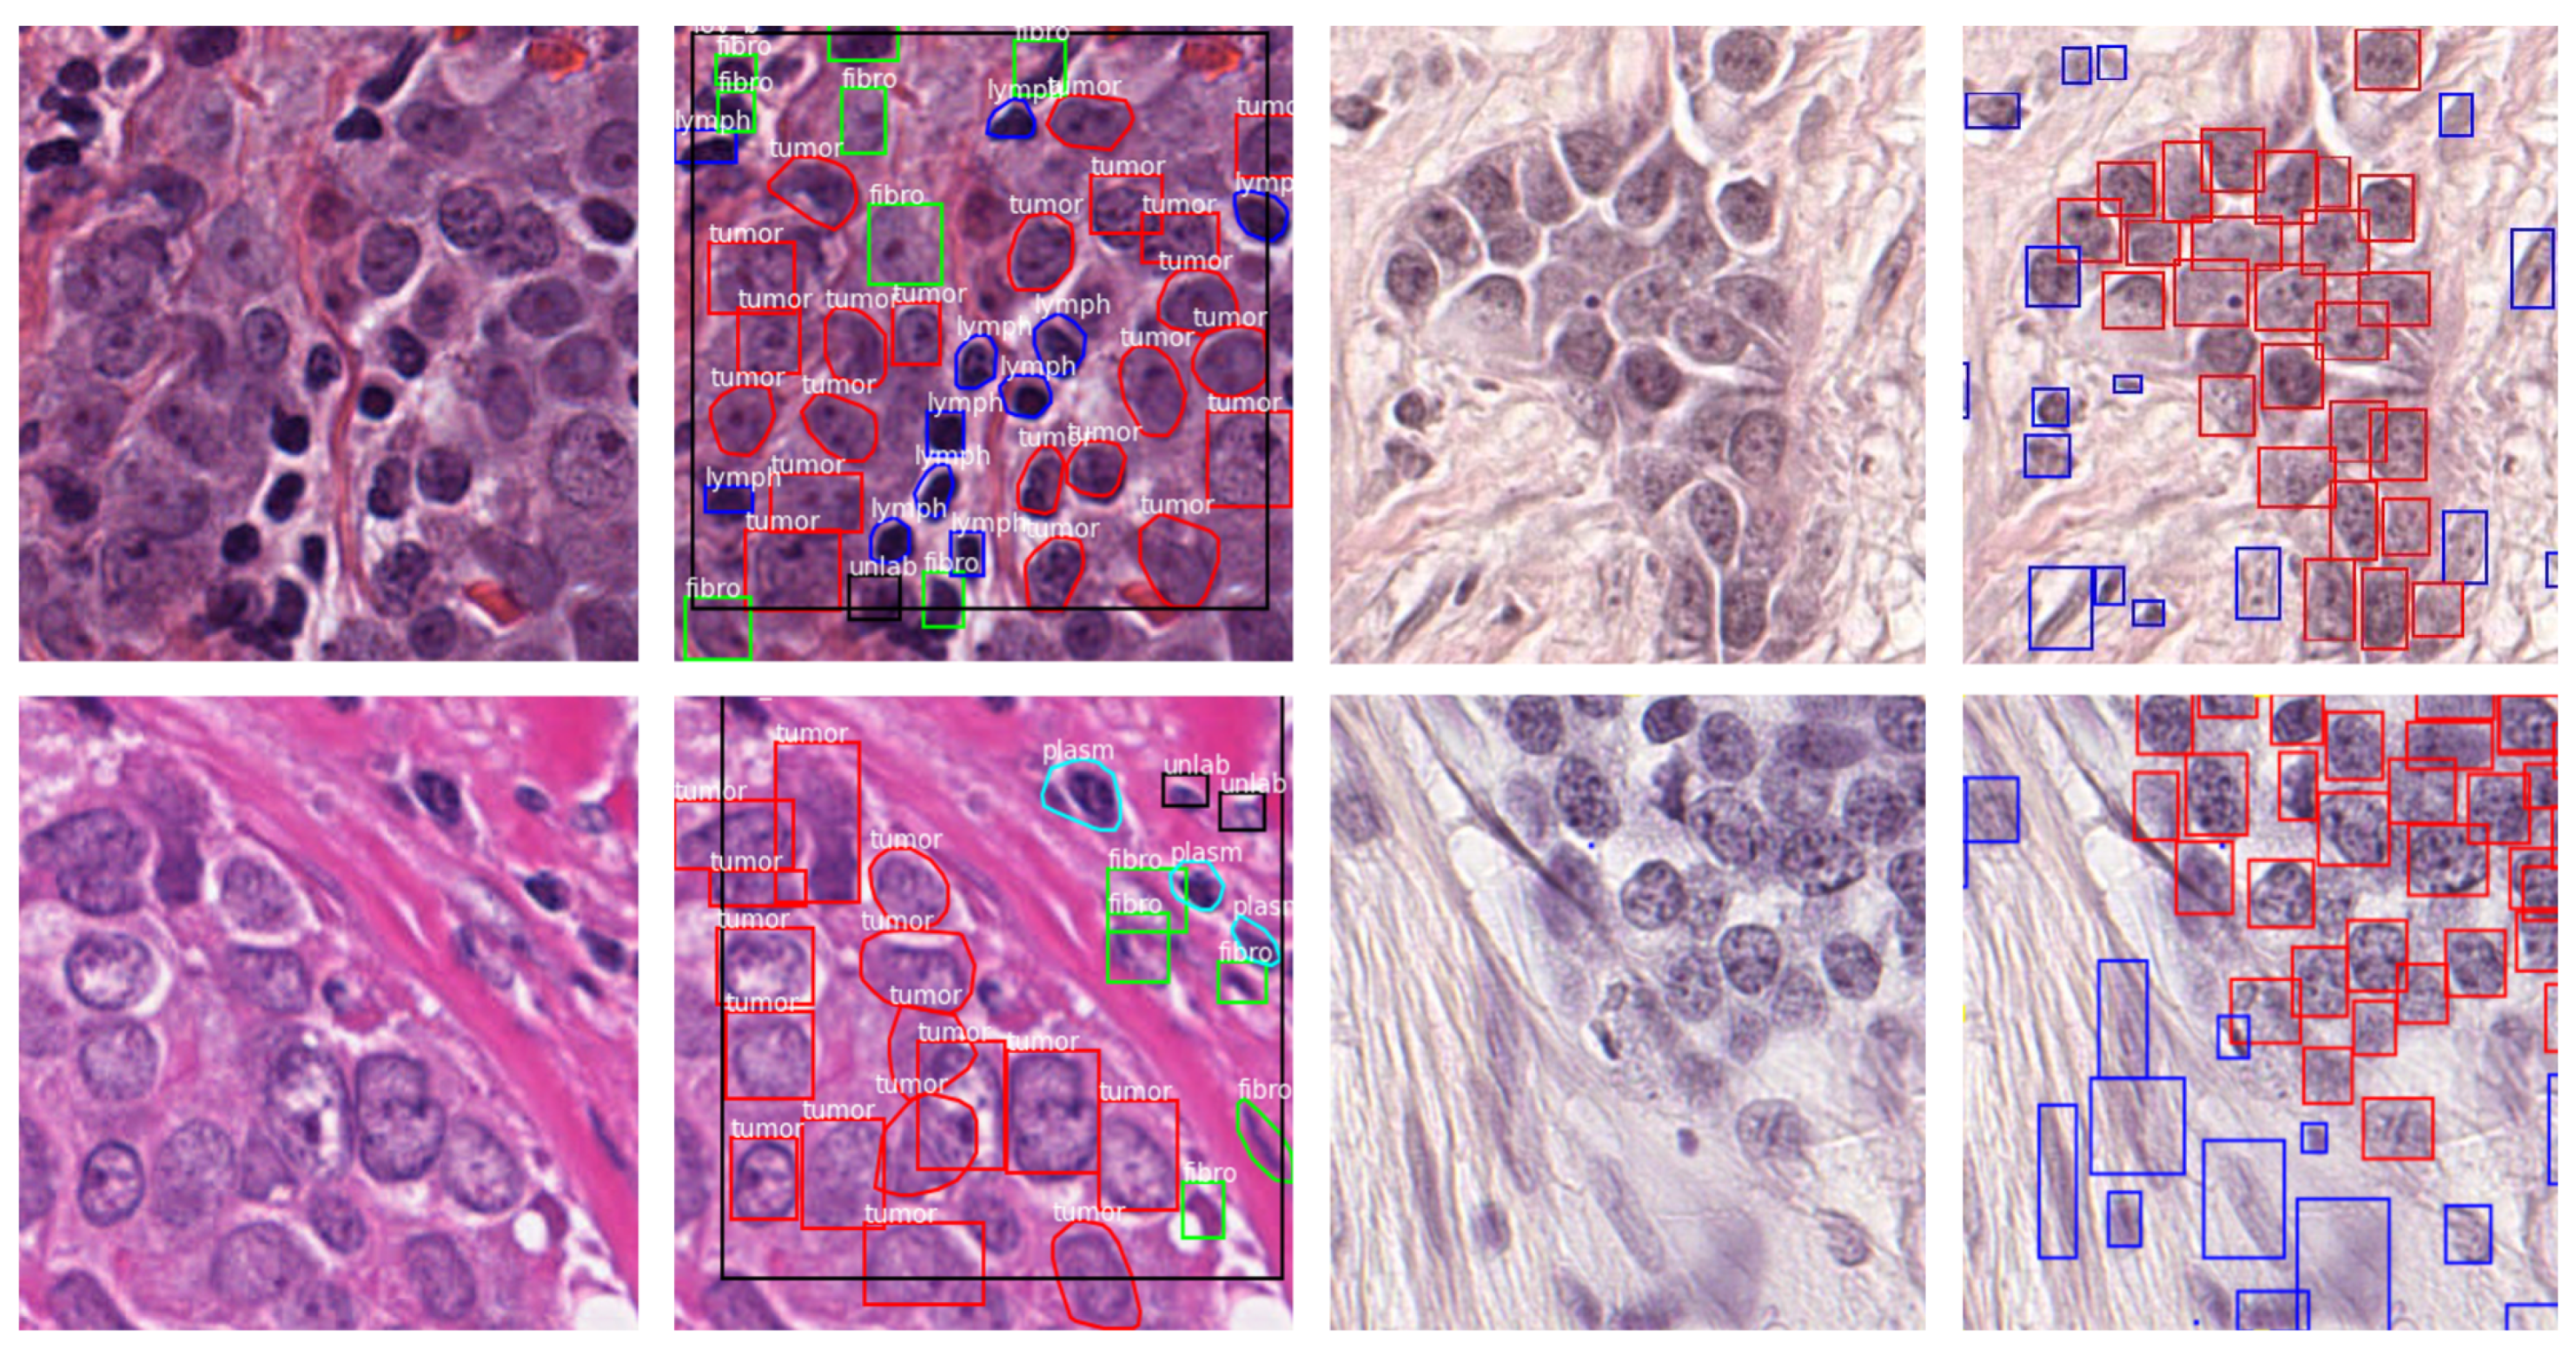 Clinical and pathological characteristics of AA and CAU breast cancer